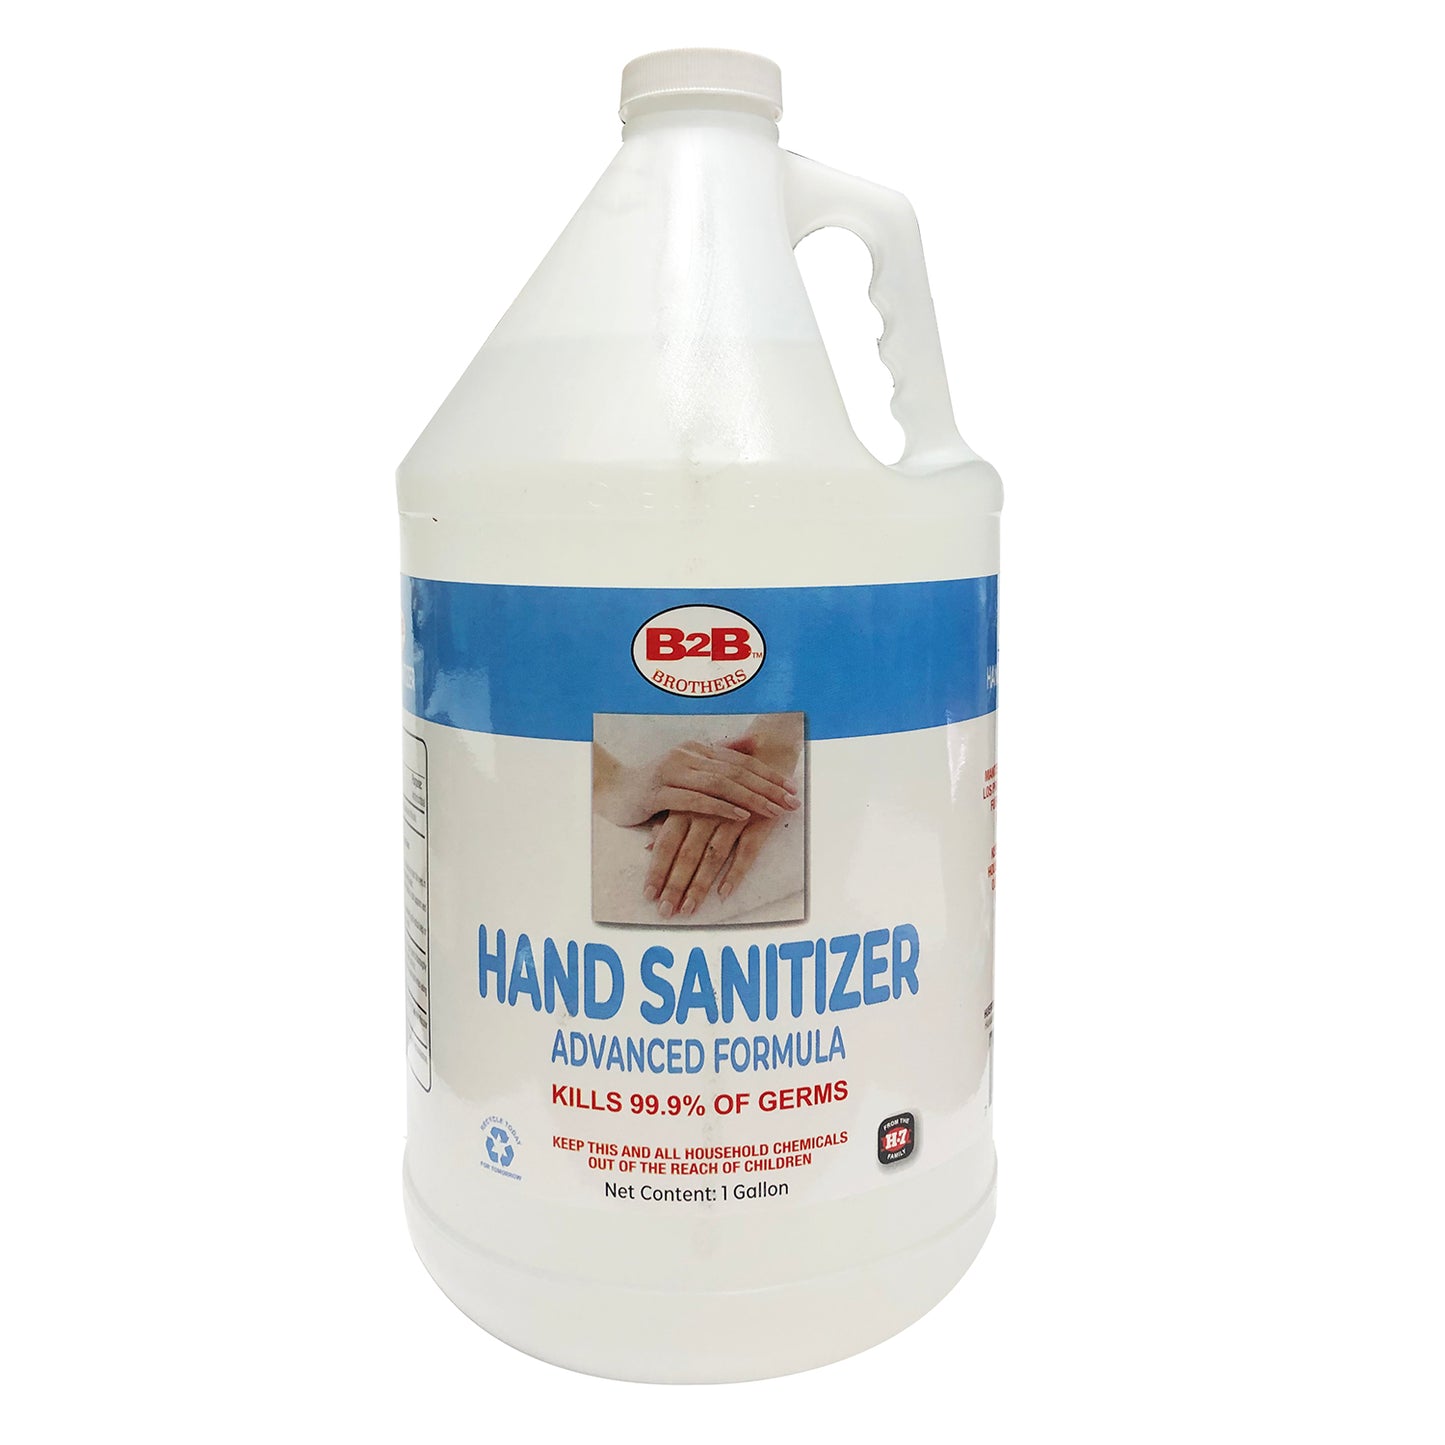 Hand Sanitizer Advanced Formula "1 GALLON" 70% Ethyl Alcohol